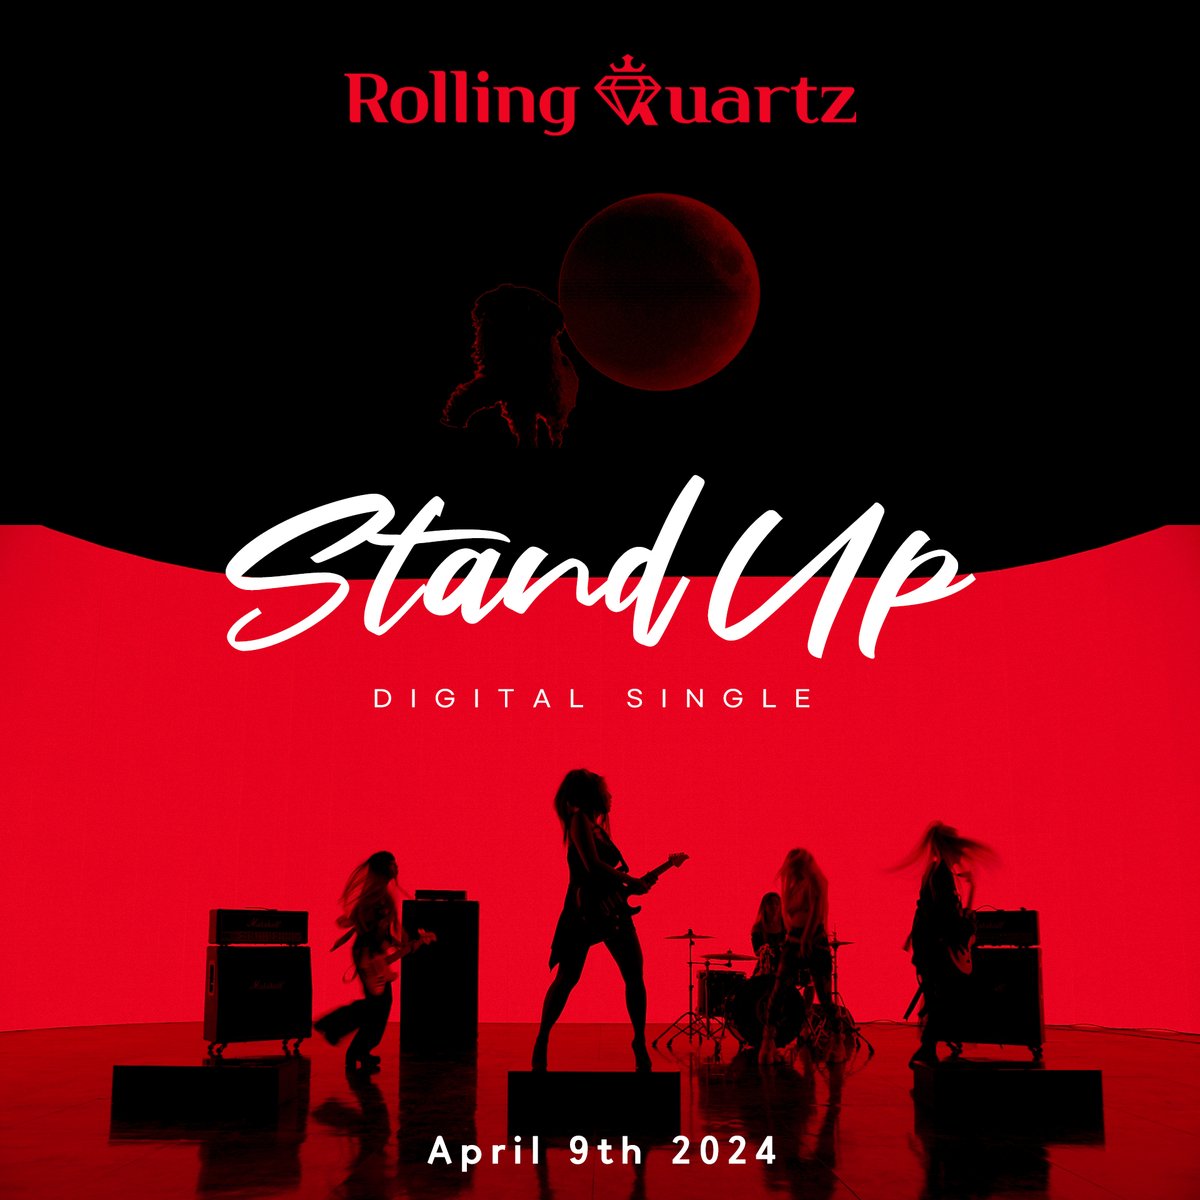 Rolling Quartz Digital Single 'Stand Up' Coming Soon Poster 💎❤️👑🐶🦁 2024.04.09. 12:00PM KST 롤링쿼츠 디지털 싱글! 스탠드업! 다이아뎀과 함께 춤을... #RollingQuartz #DigitalSingle #롤링쿼츠 #디지털싱글 #StandUp #스탠드업 #ComingSoonPoster #커밍순포스터 #Diadem #다이아뎀